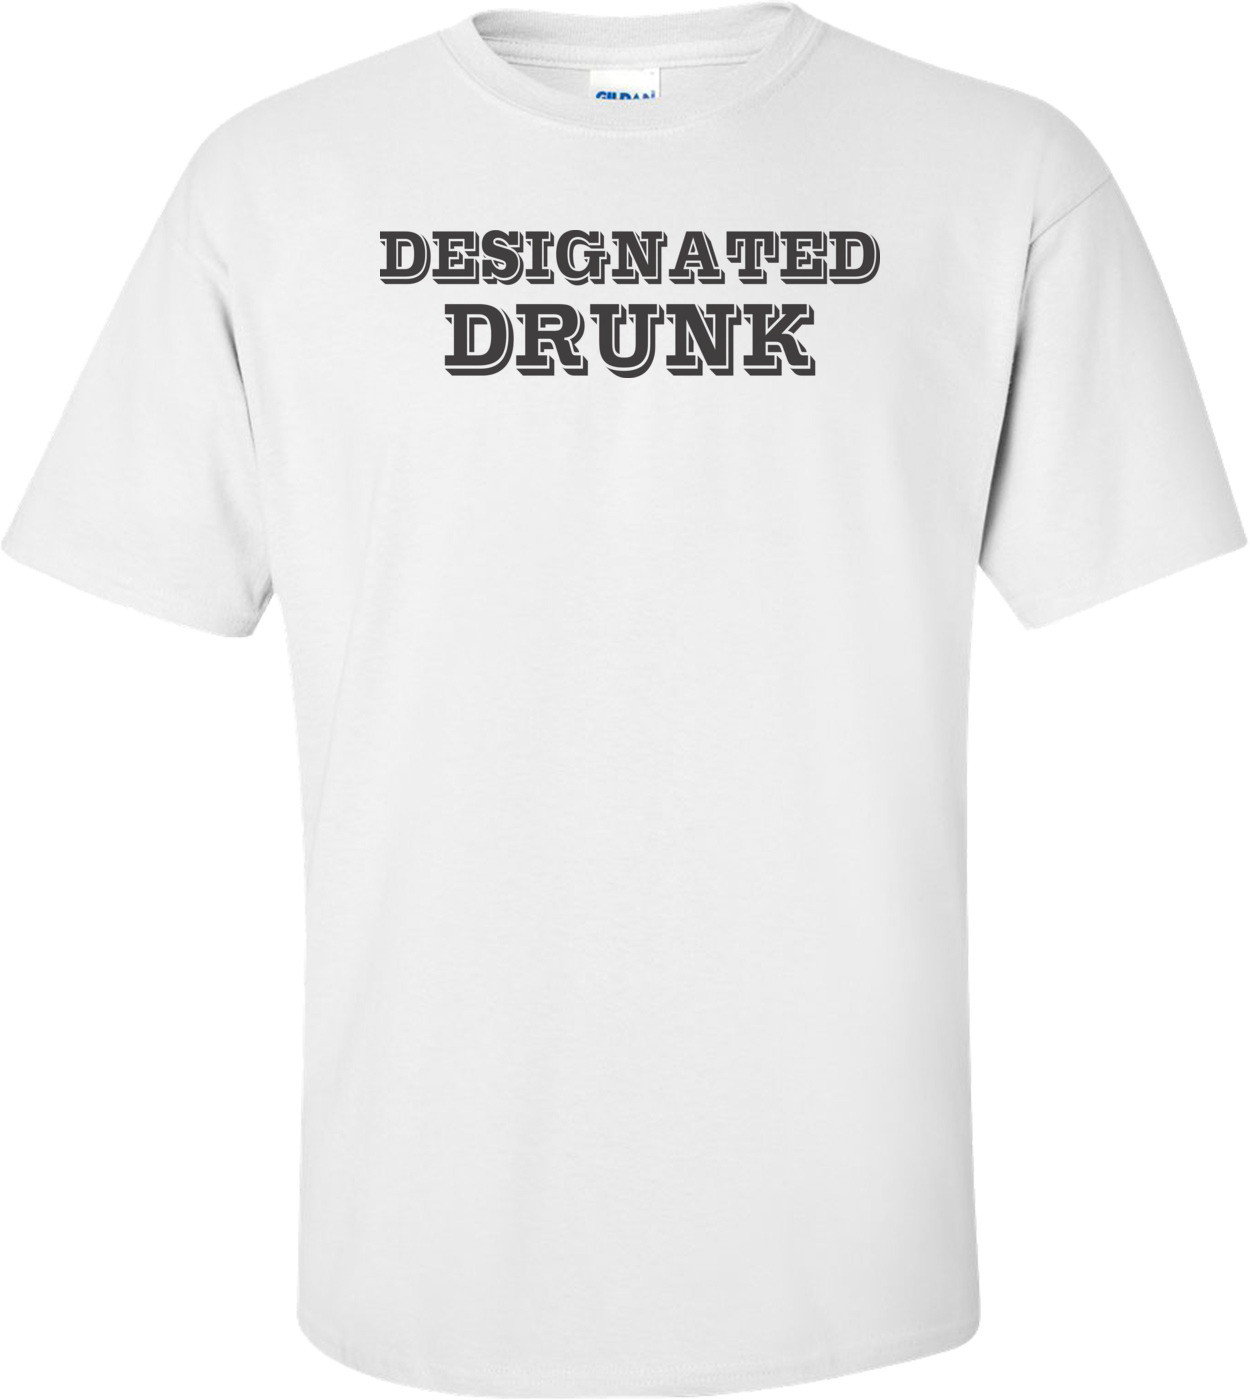 Designated Drunk T-shirt